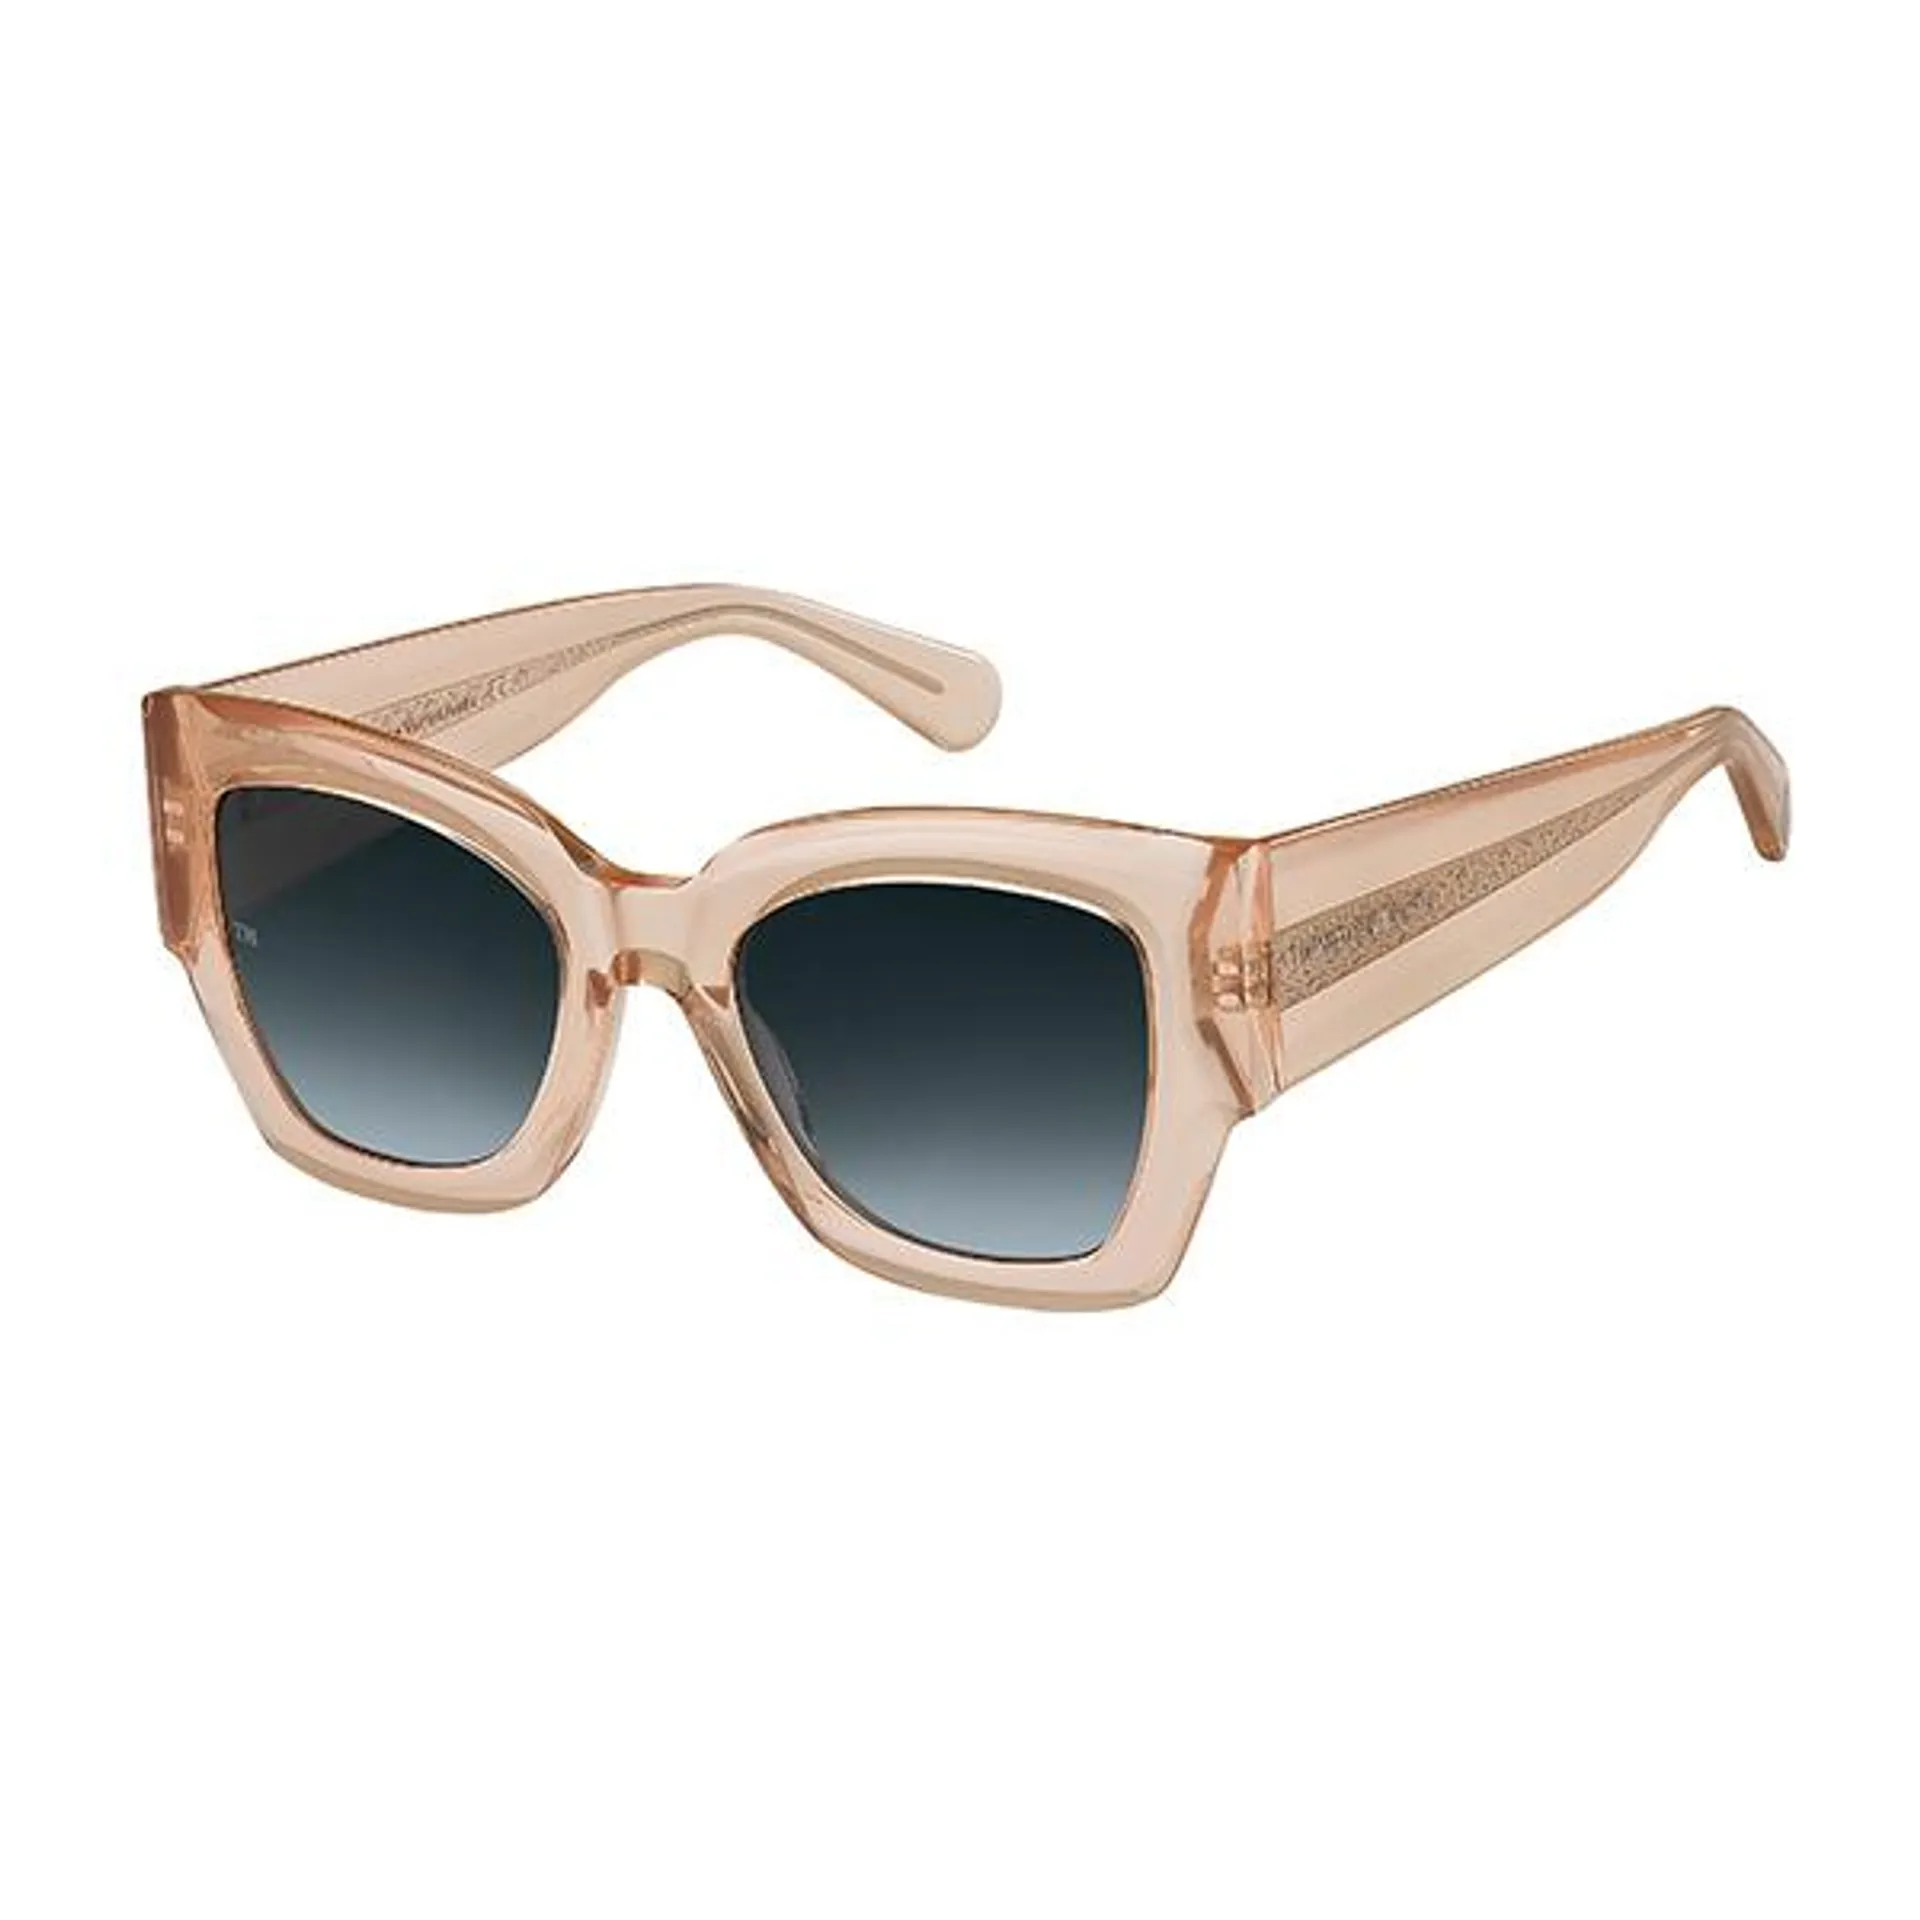 Tommy Hilfiger Women's Nude Rectangular Sunglasses